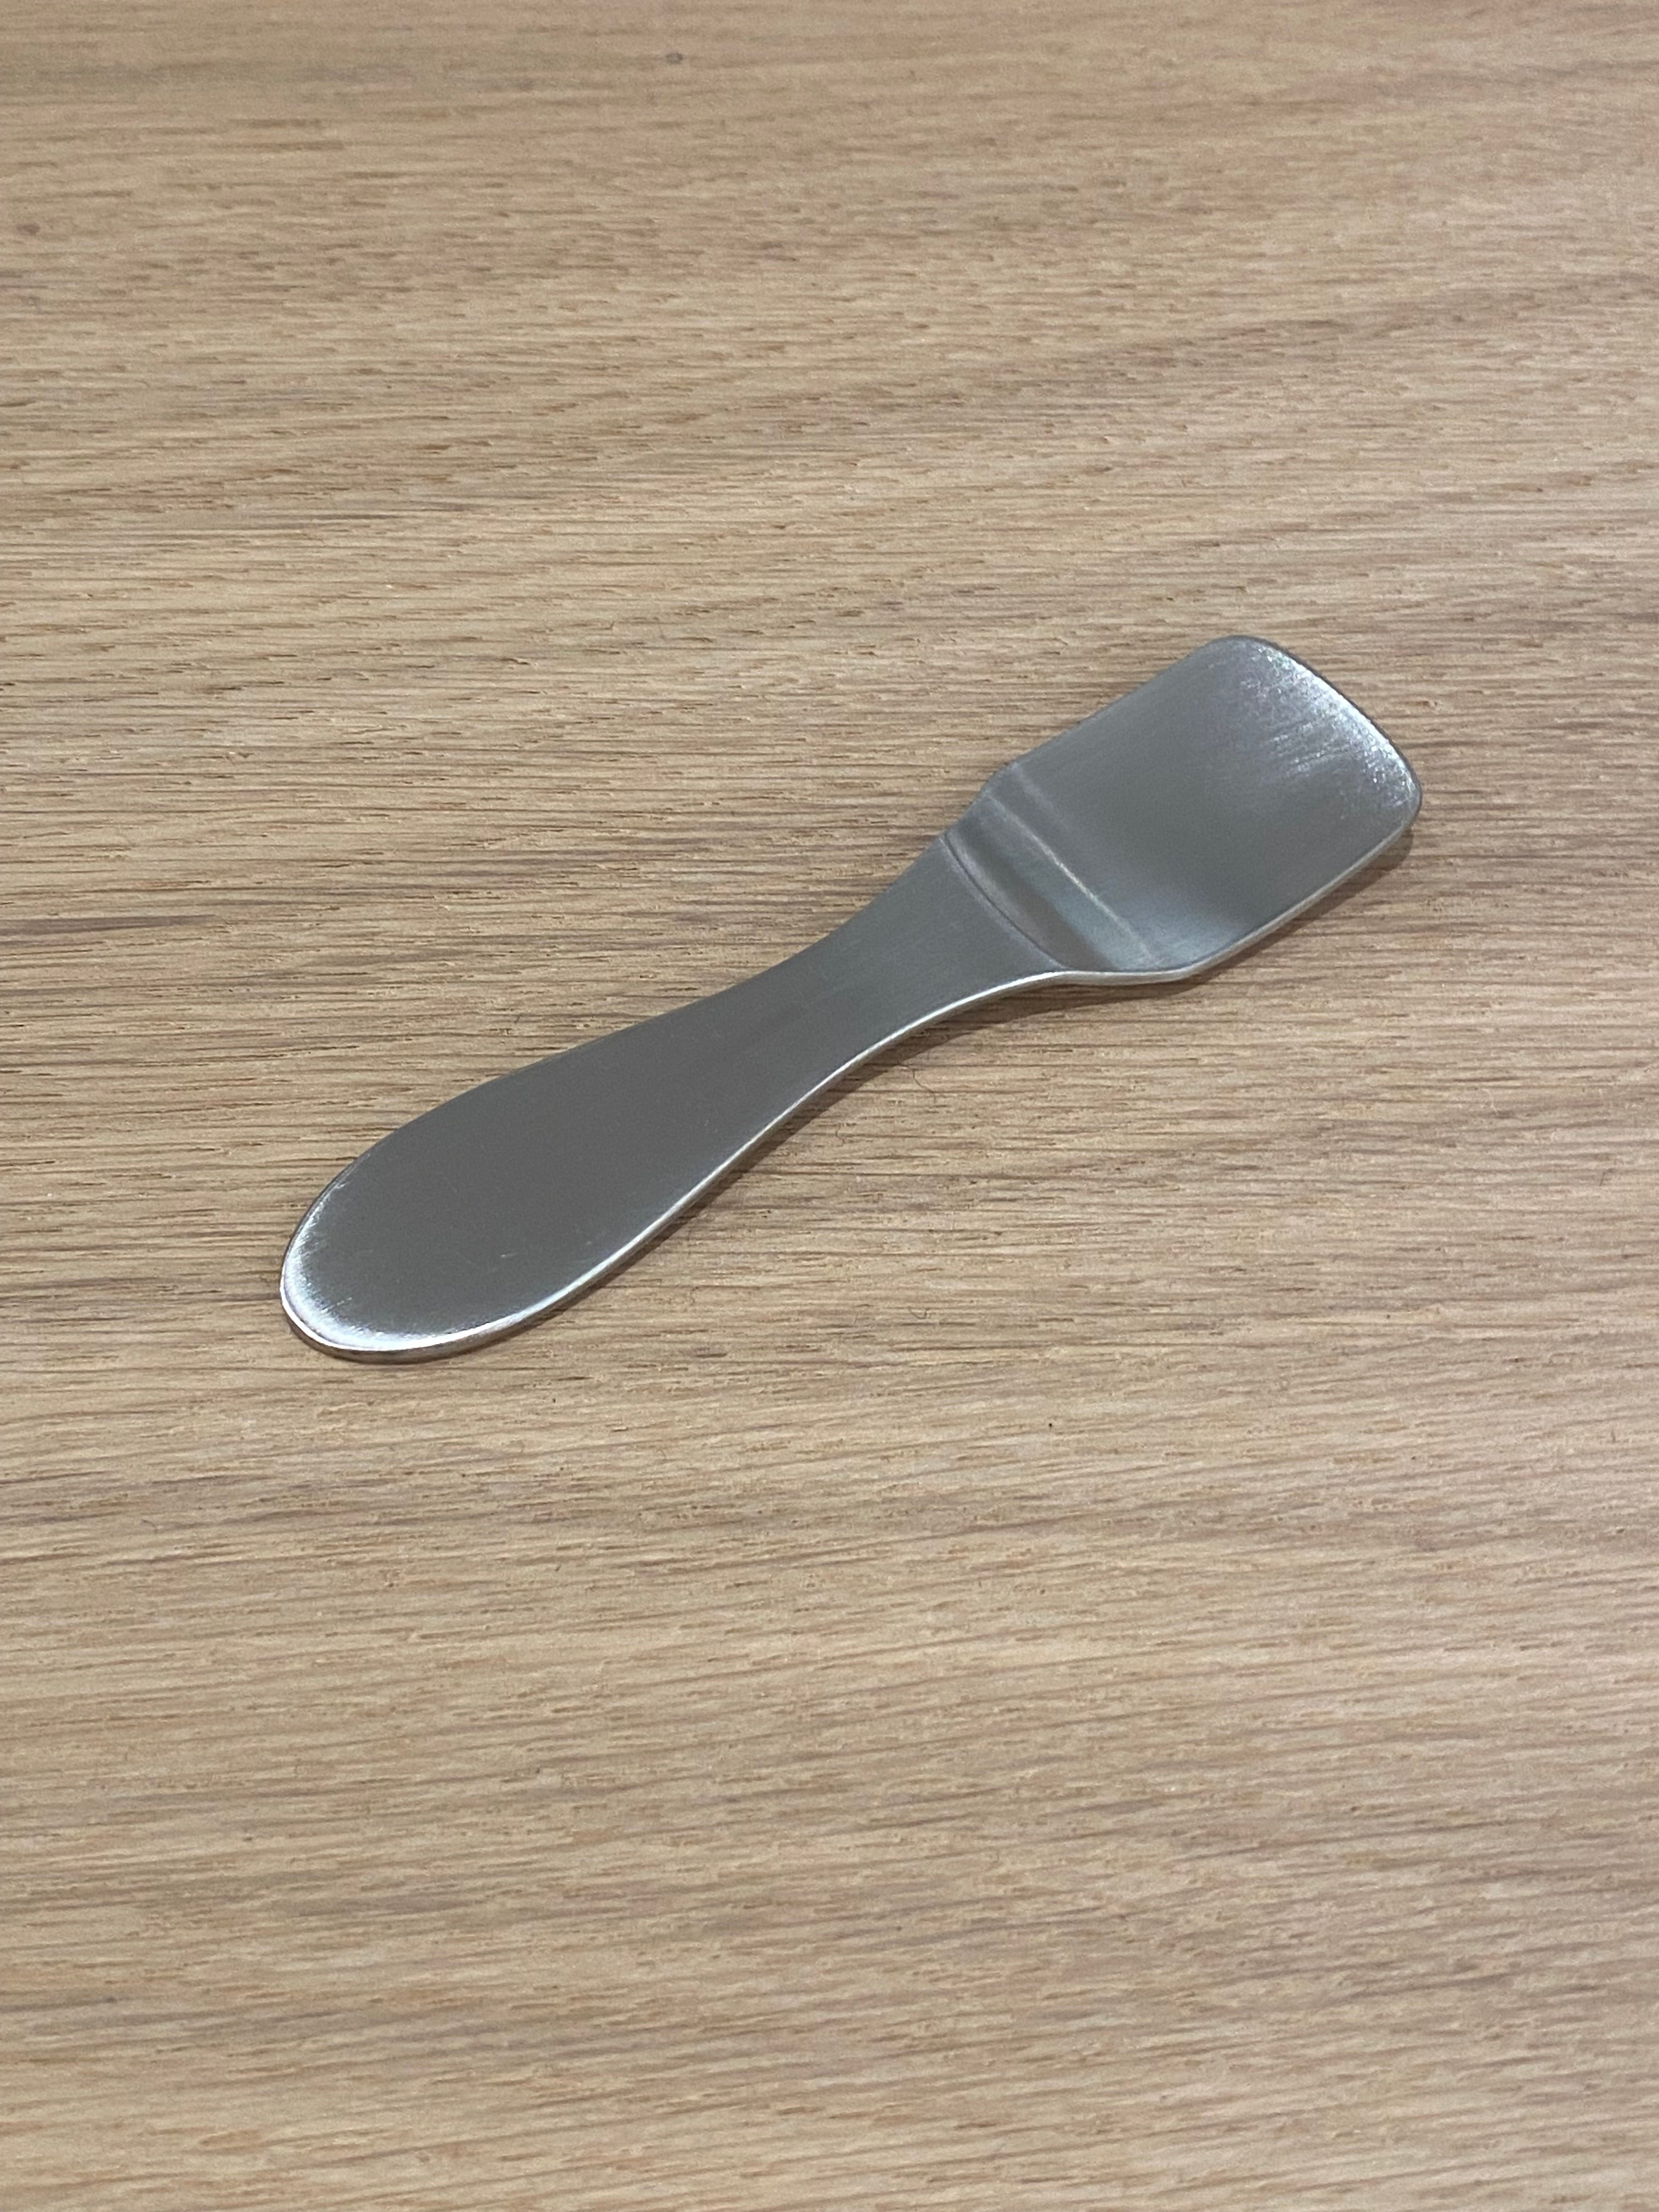 Small steel spoon